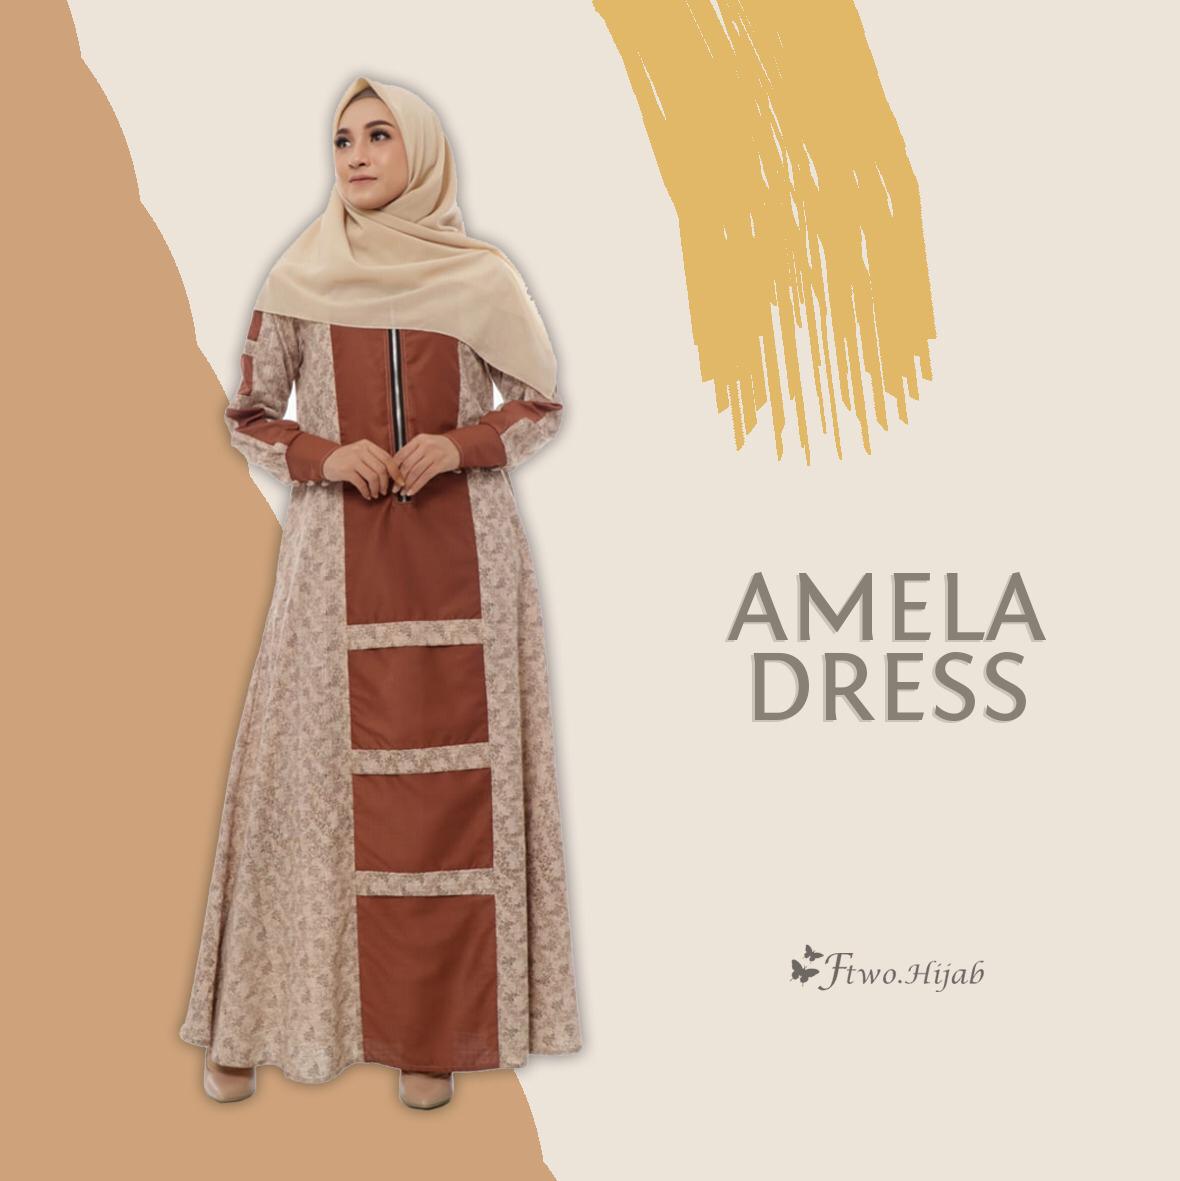 Amela Dress - Moca